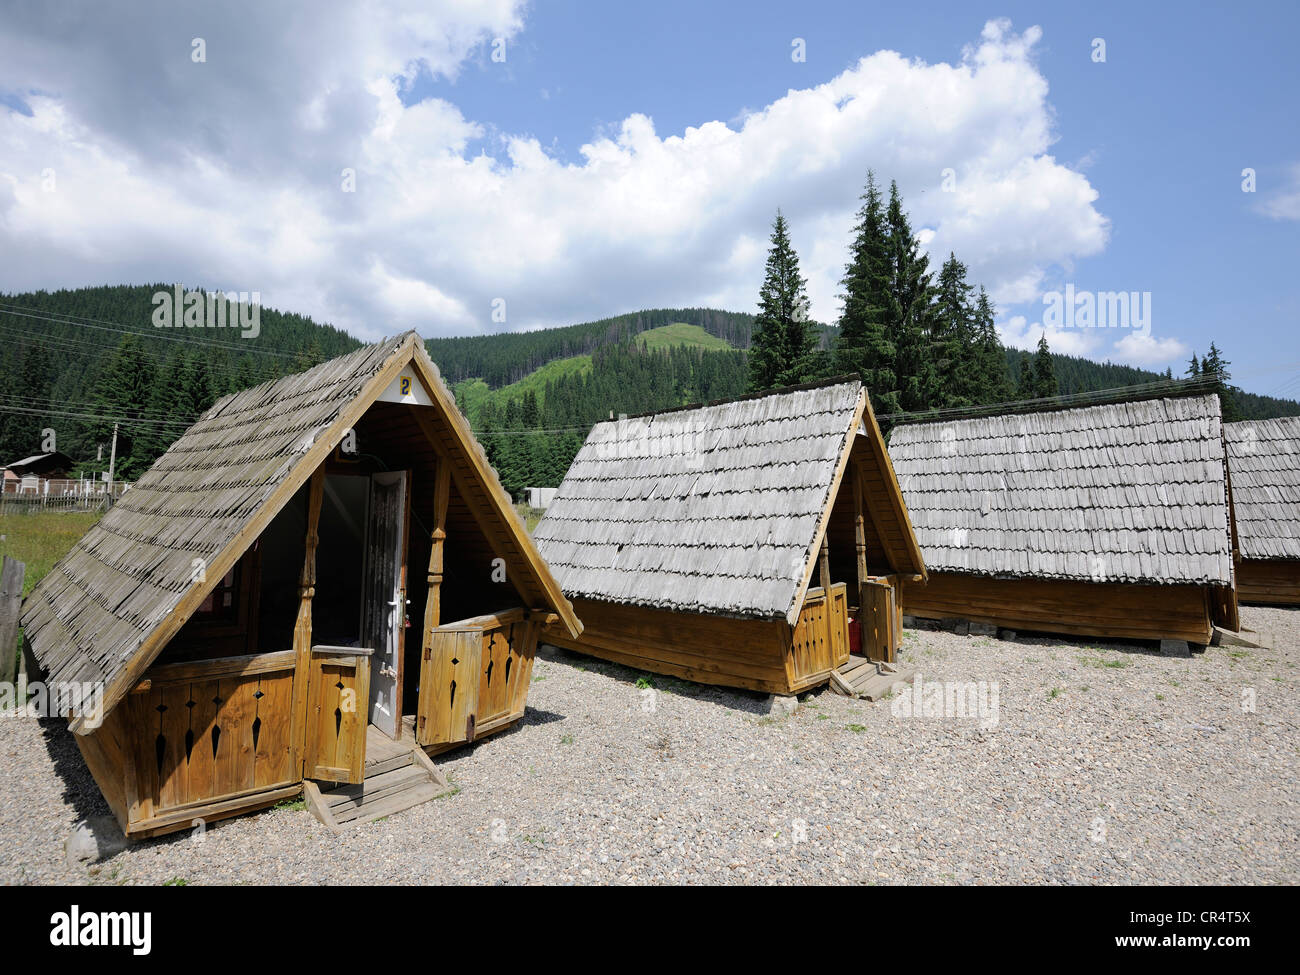 Kleine Hütten, Camping, Hütten, obarsia lotrului Straße, transalpina Dn 67 c Mountain Road, Rumänien, Europa Stockfoto